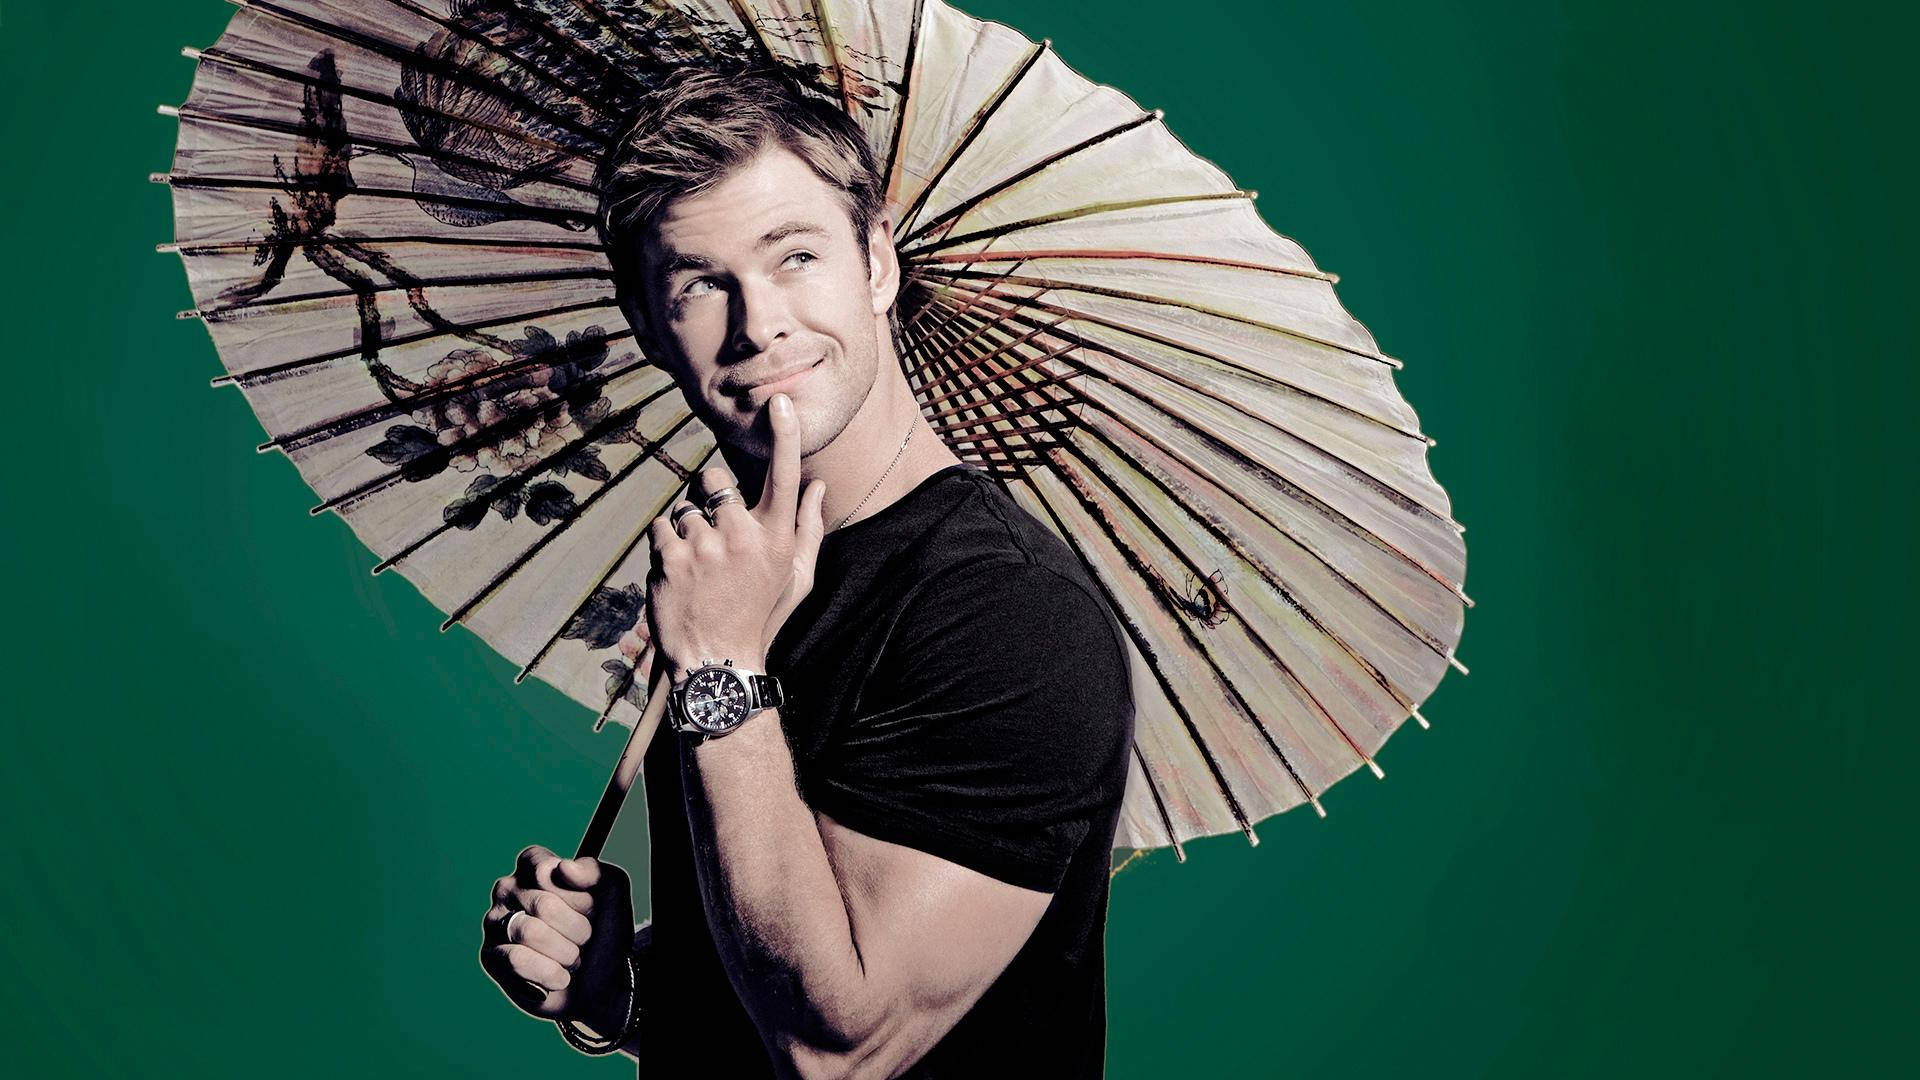 Image Chris Hemsworth With An Umbrella Background